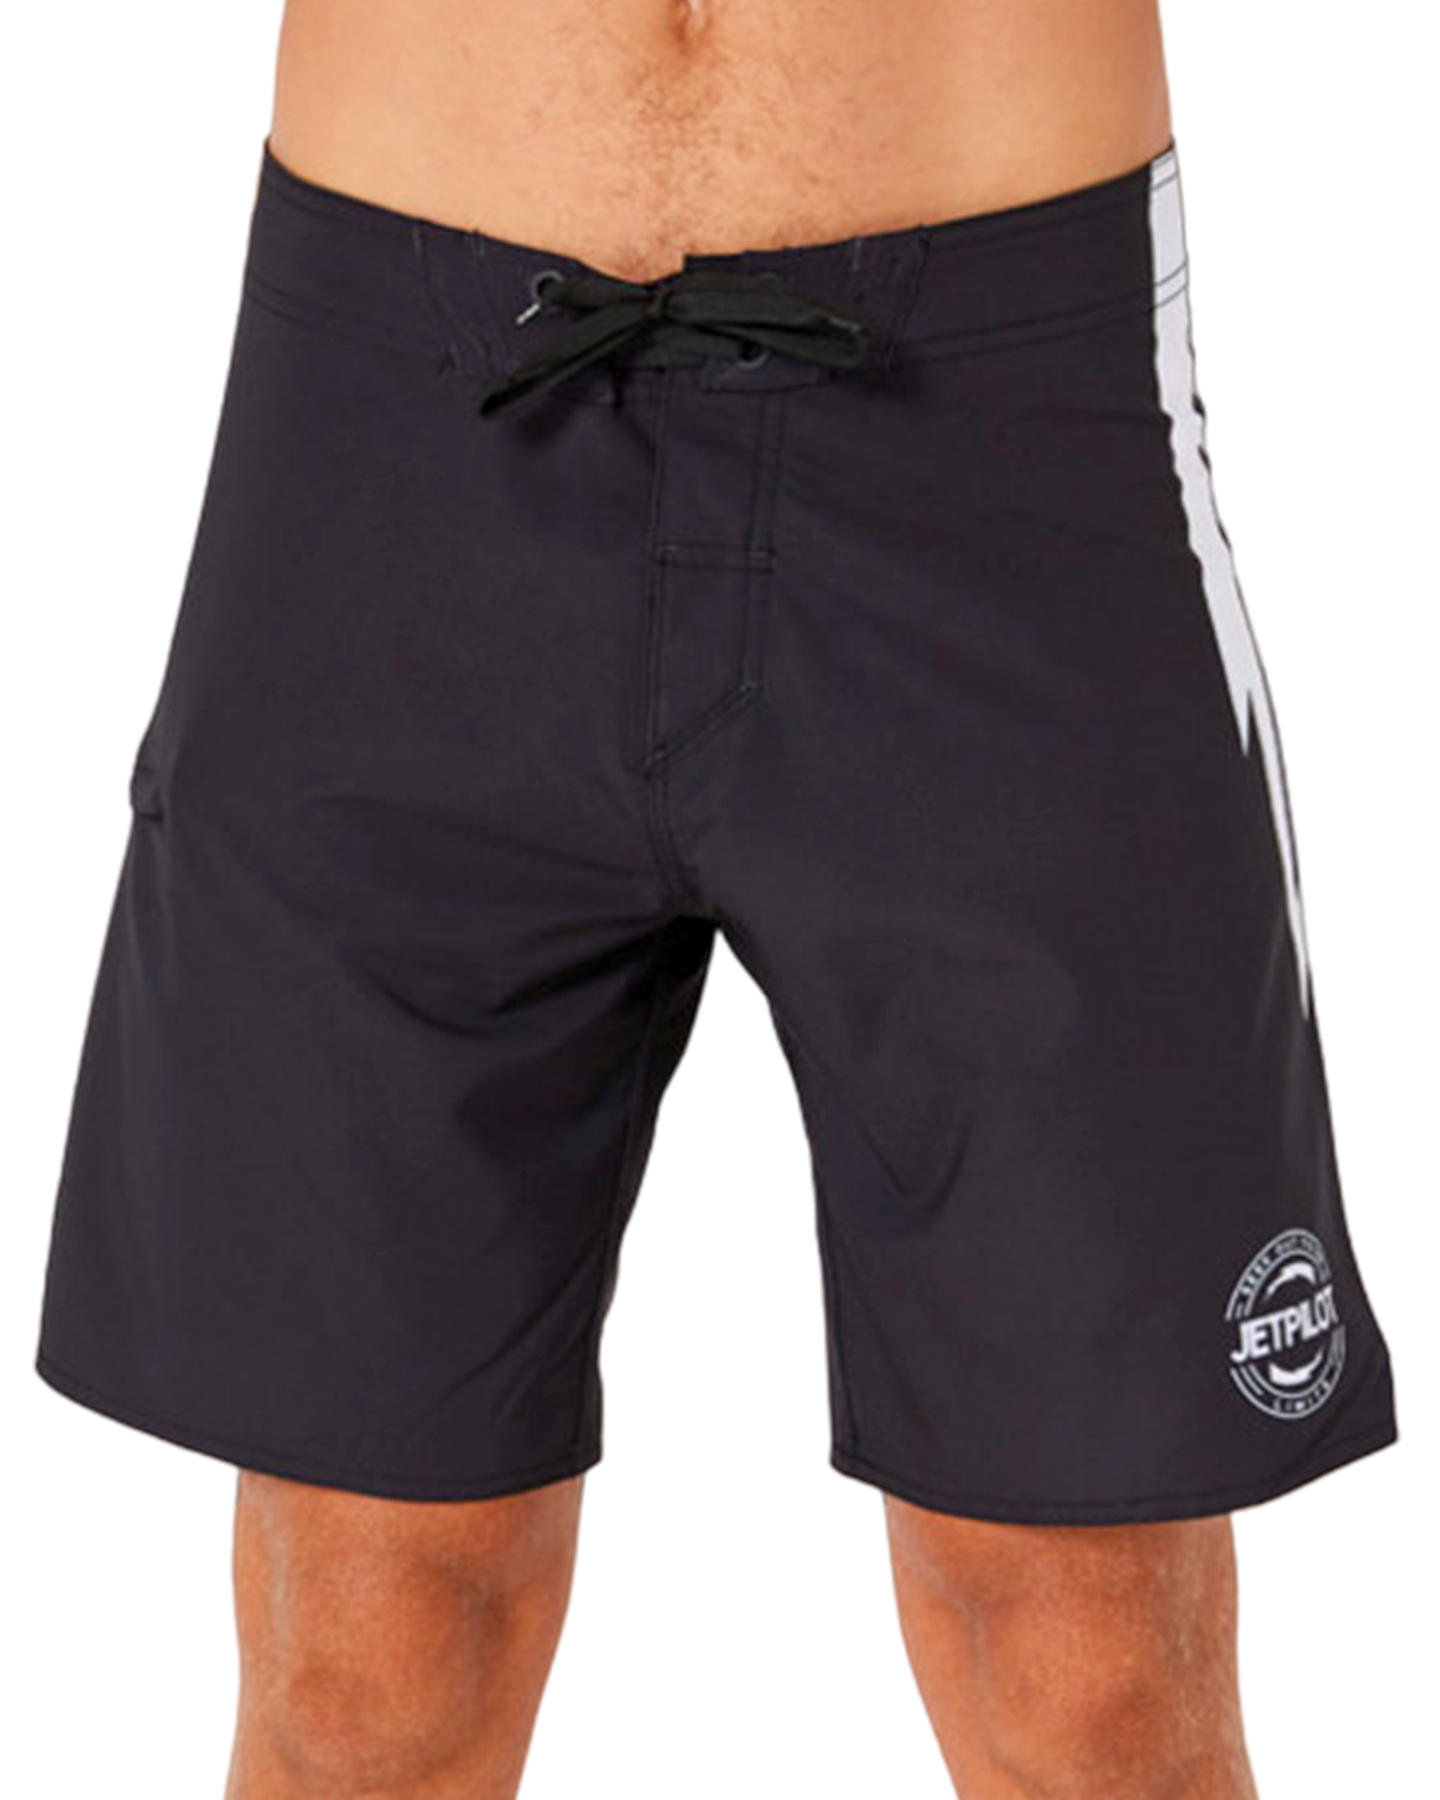 Shop Mens Shorts & Boardshorts - Jetpilot